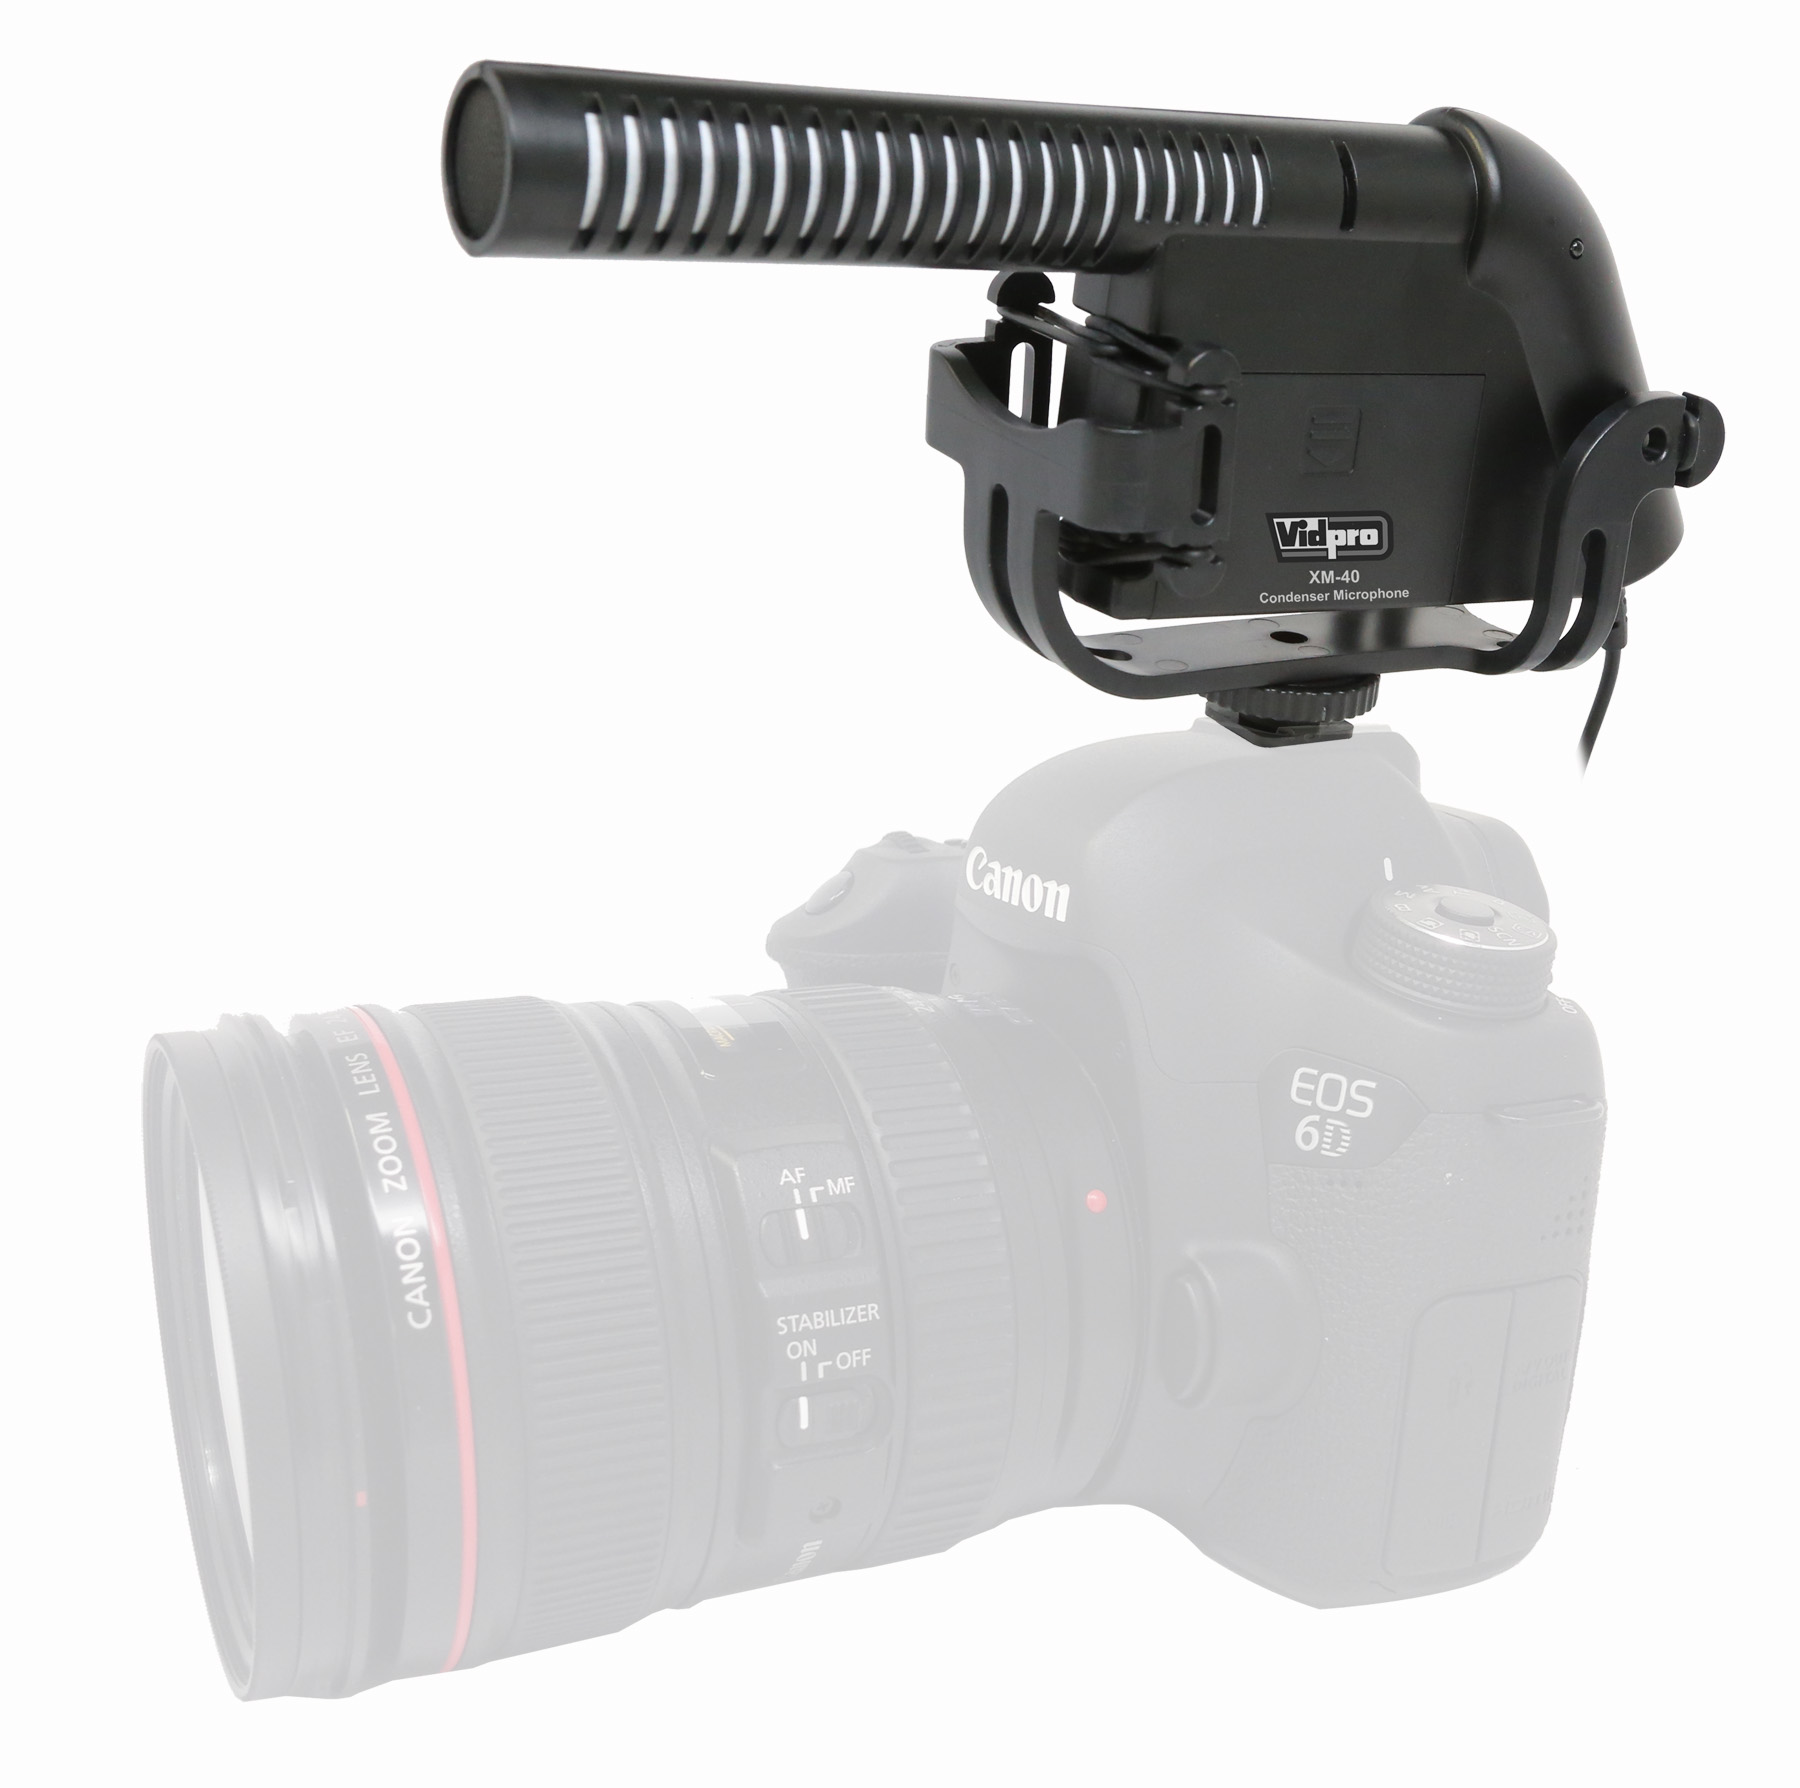 External Microphone for CanonDigital Camera